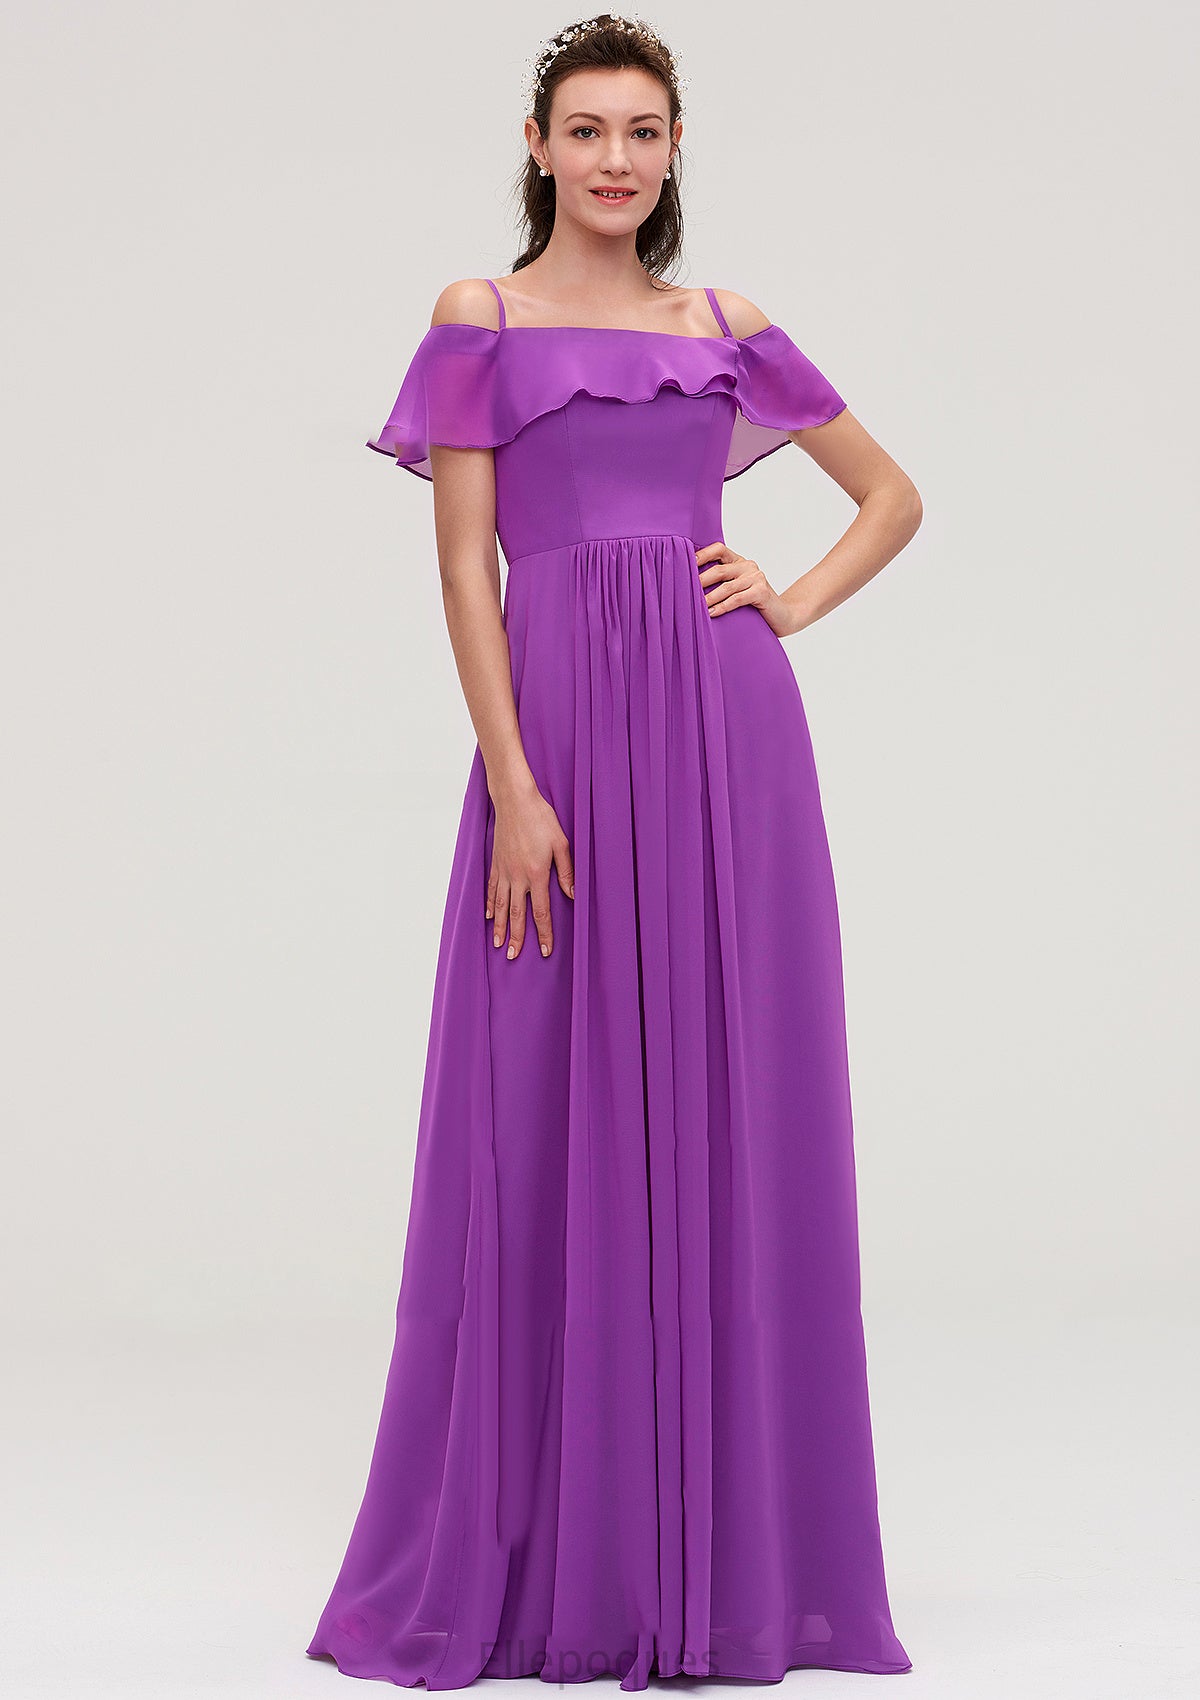 Sleeveless Off-the-Shoulder Chiffon A-line/Princess Long/Floor-Length Bridesmaid Dresseses With Ruffles Kara HOP0025452